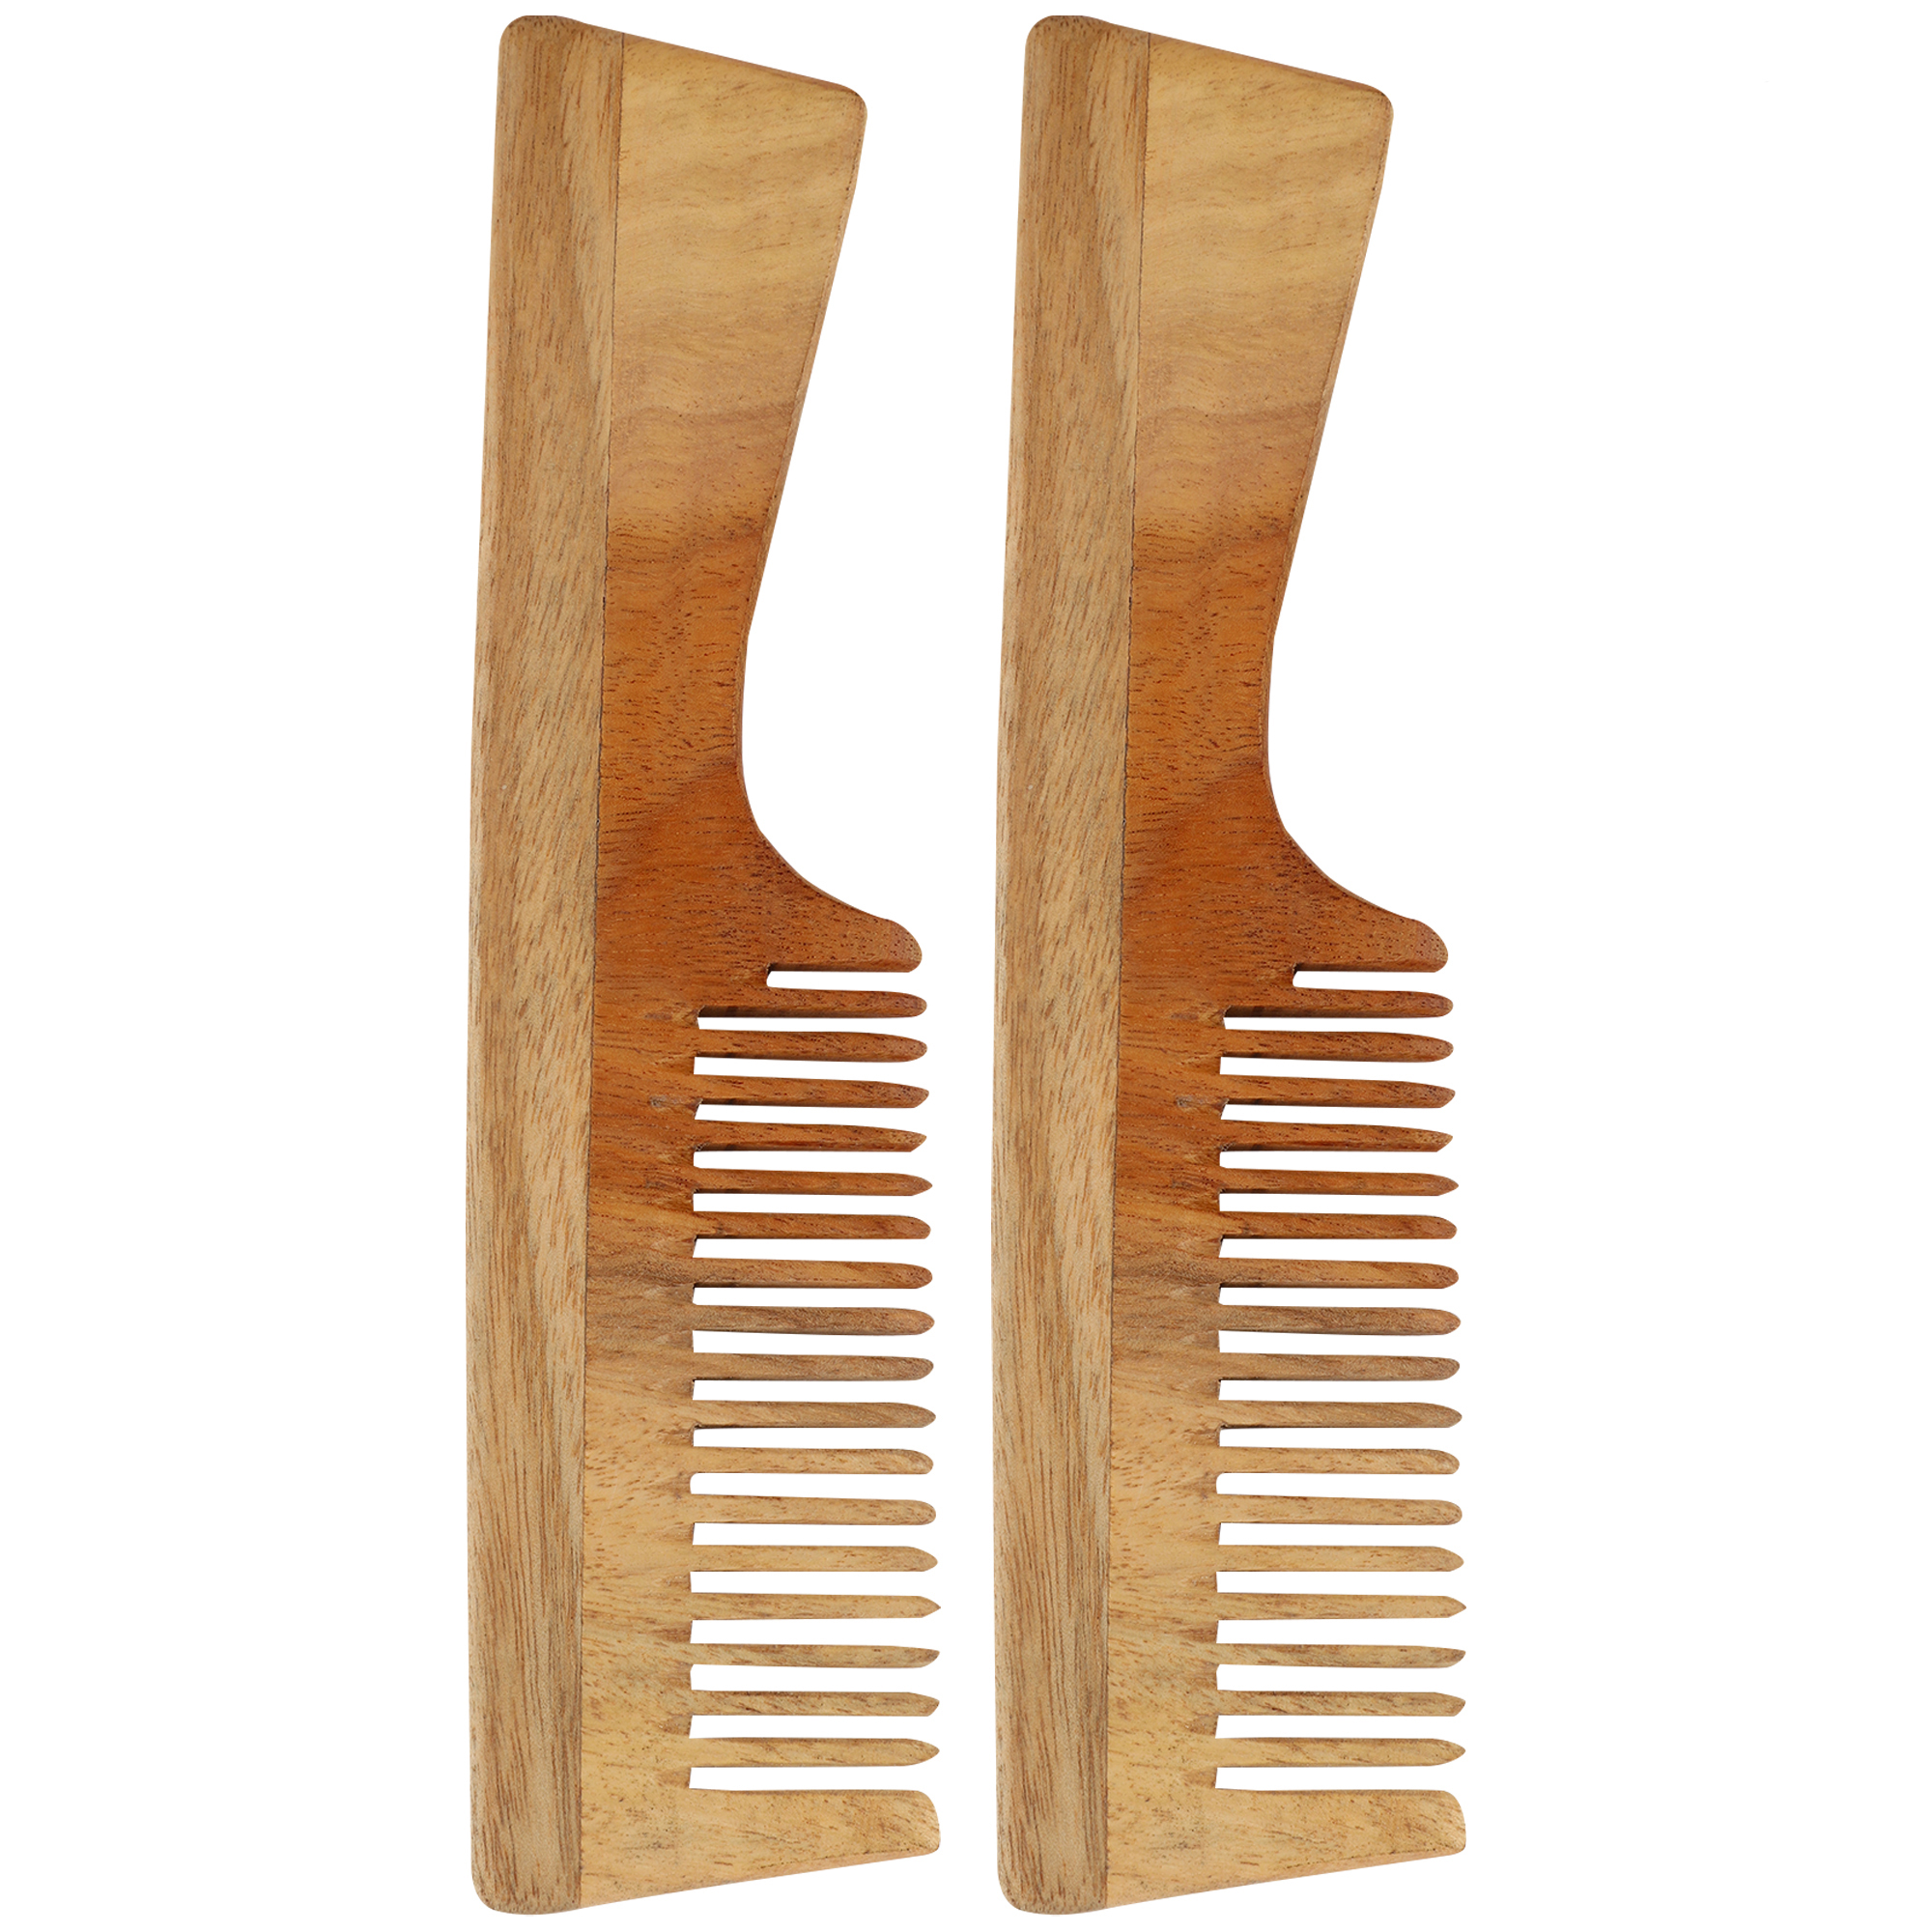 Neem Wood Rake Comb